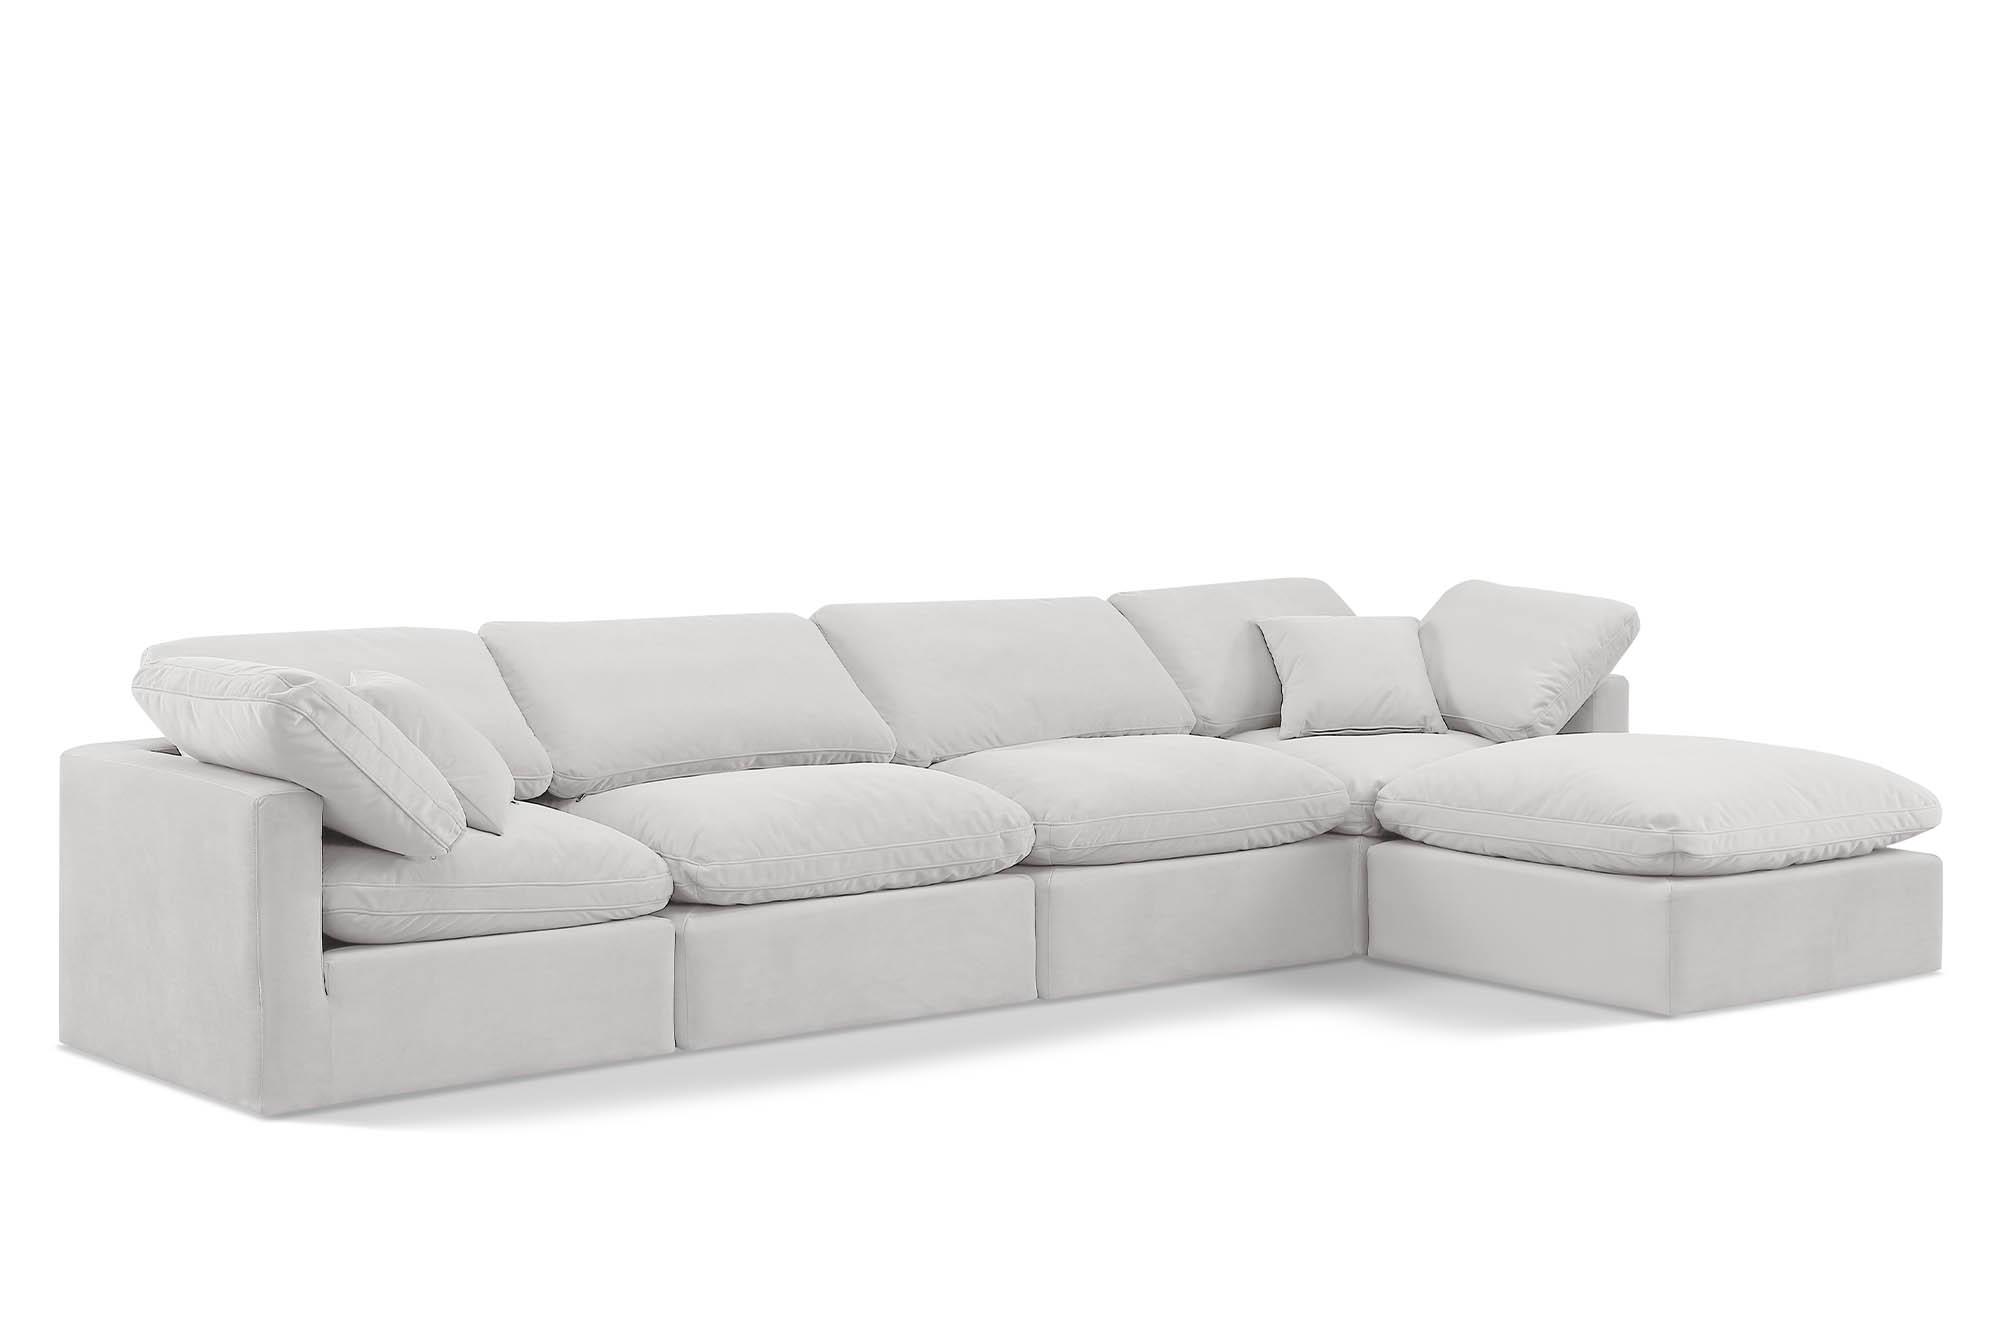 Contemporary, Modern Modular Sectional Sofa INDULGE 147Cream-Sec5A 147Cream-Sec5A in Cream Velvet